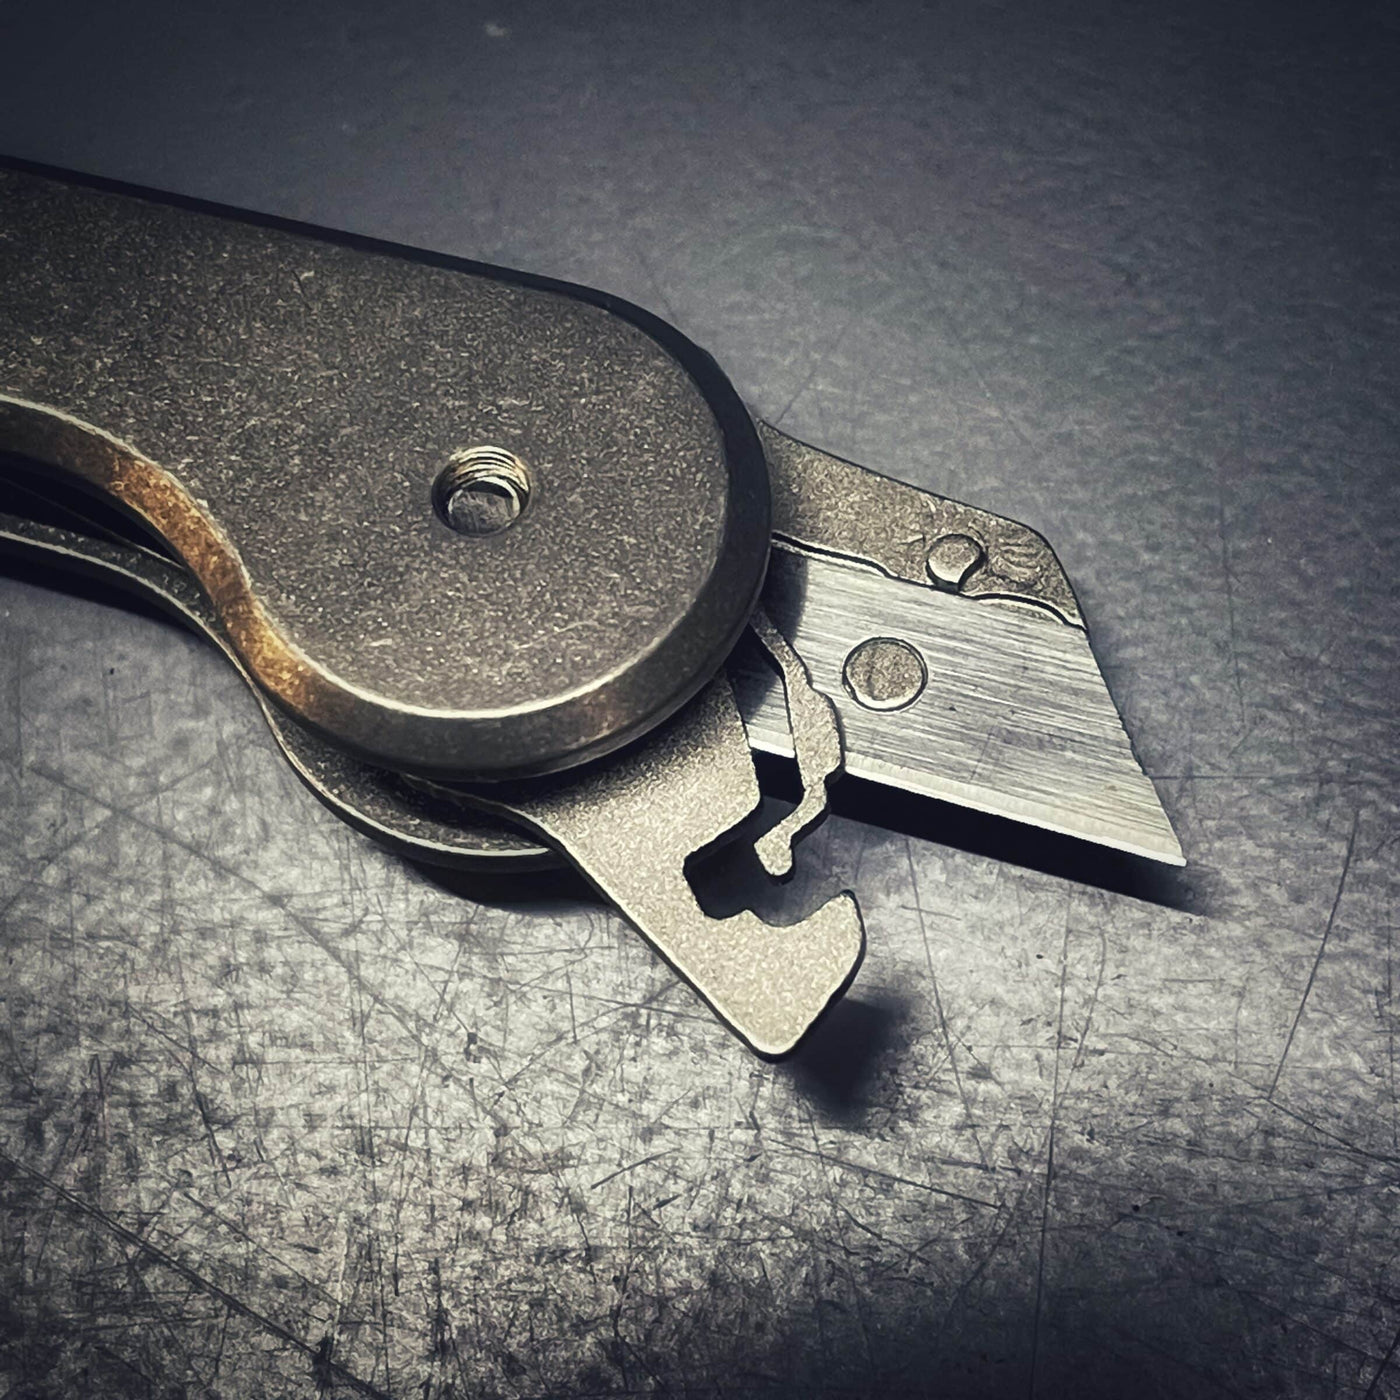 Keybar - Tool Insert Set: Mini Utility Tool & Phillips Screwdriver with Locking Plate